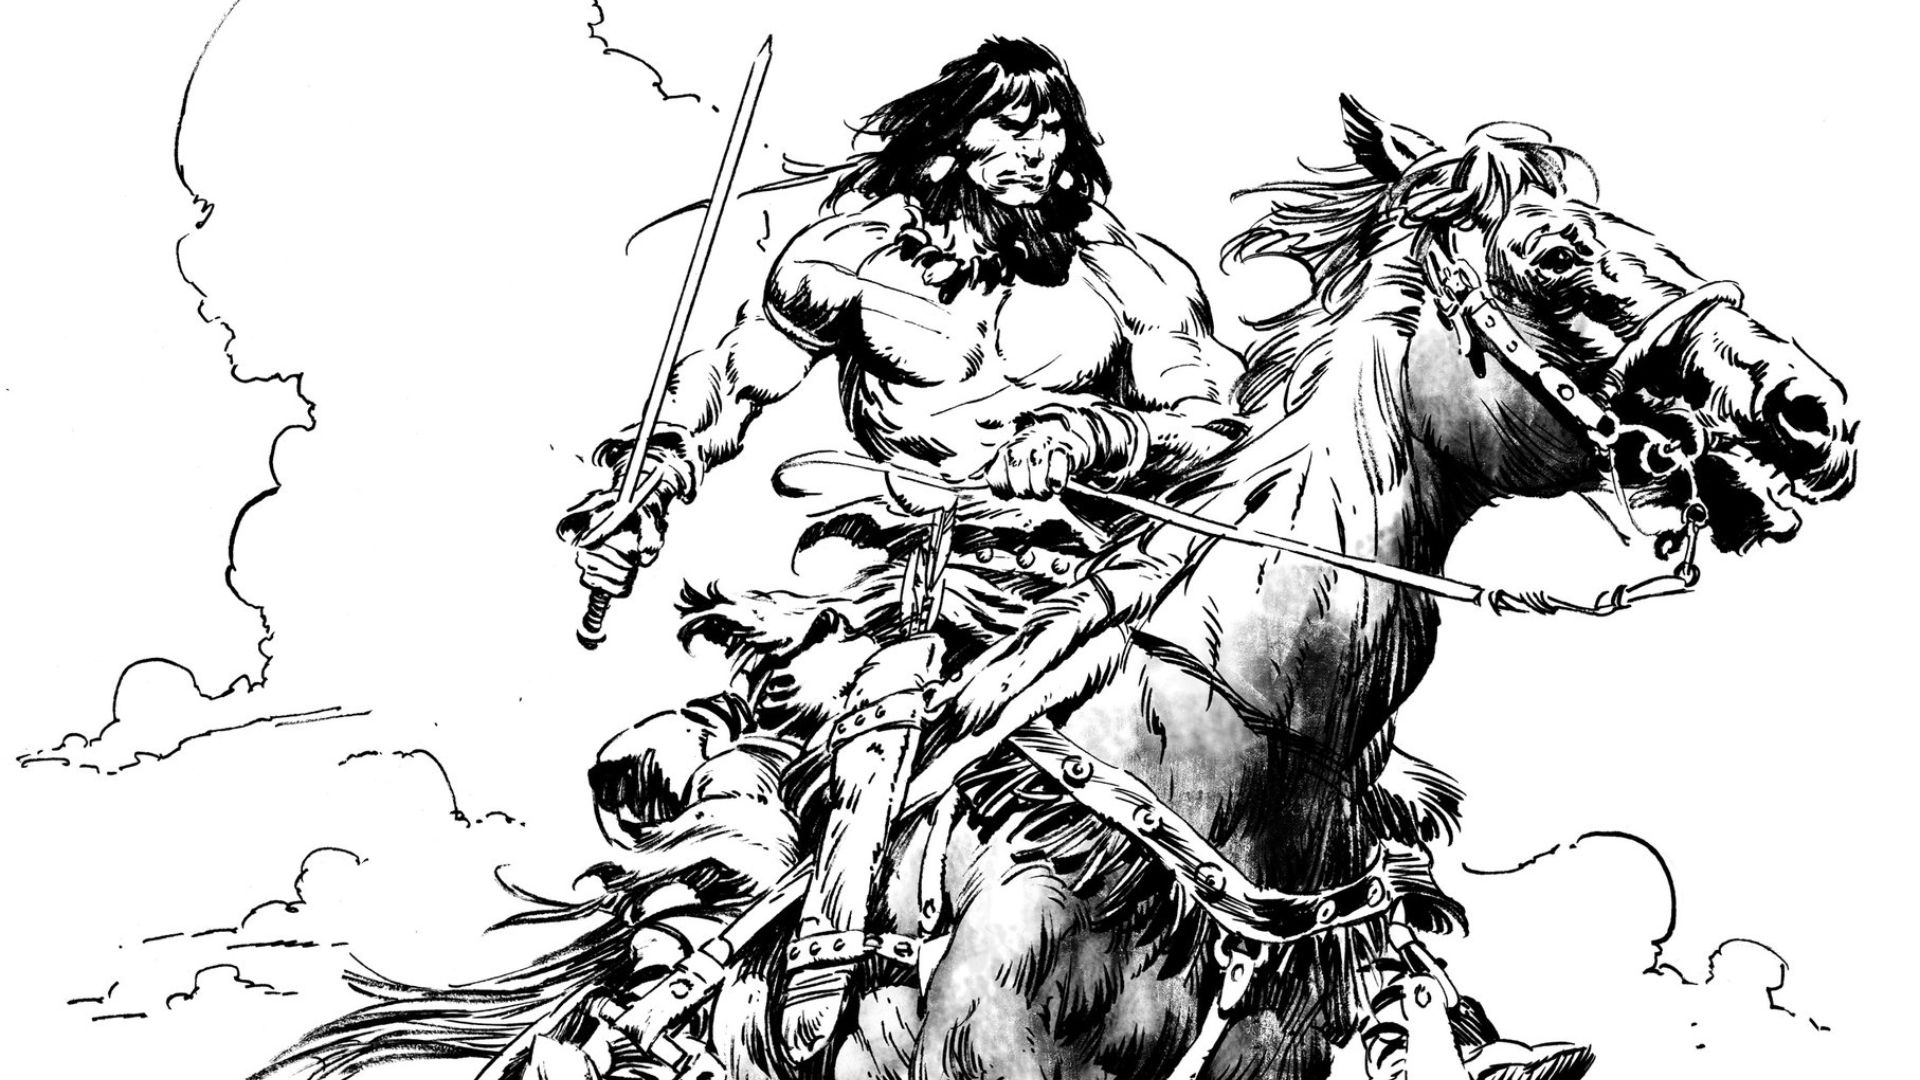 Conan the Barbarian @ Titan Comics